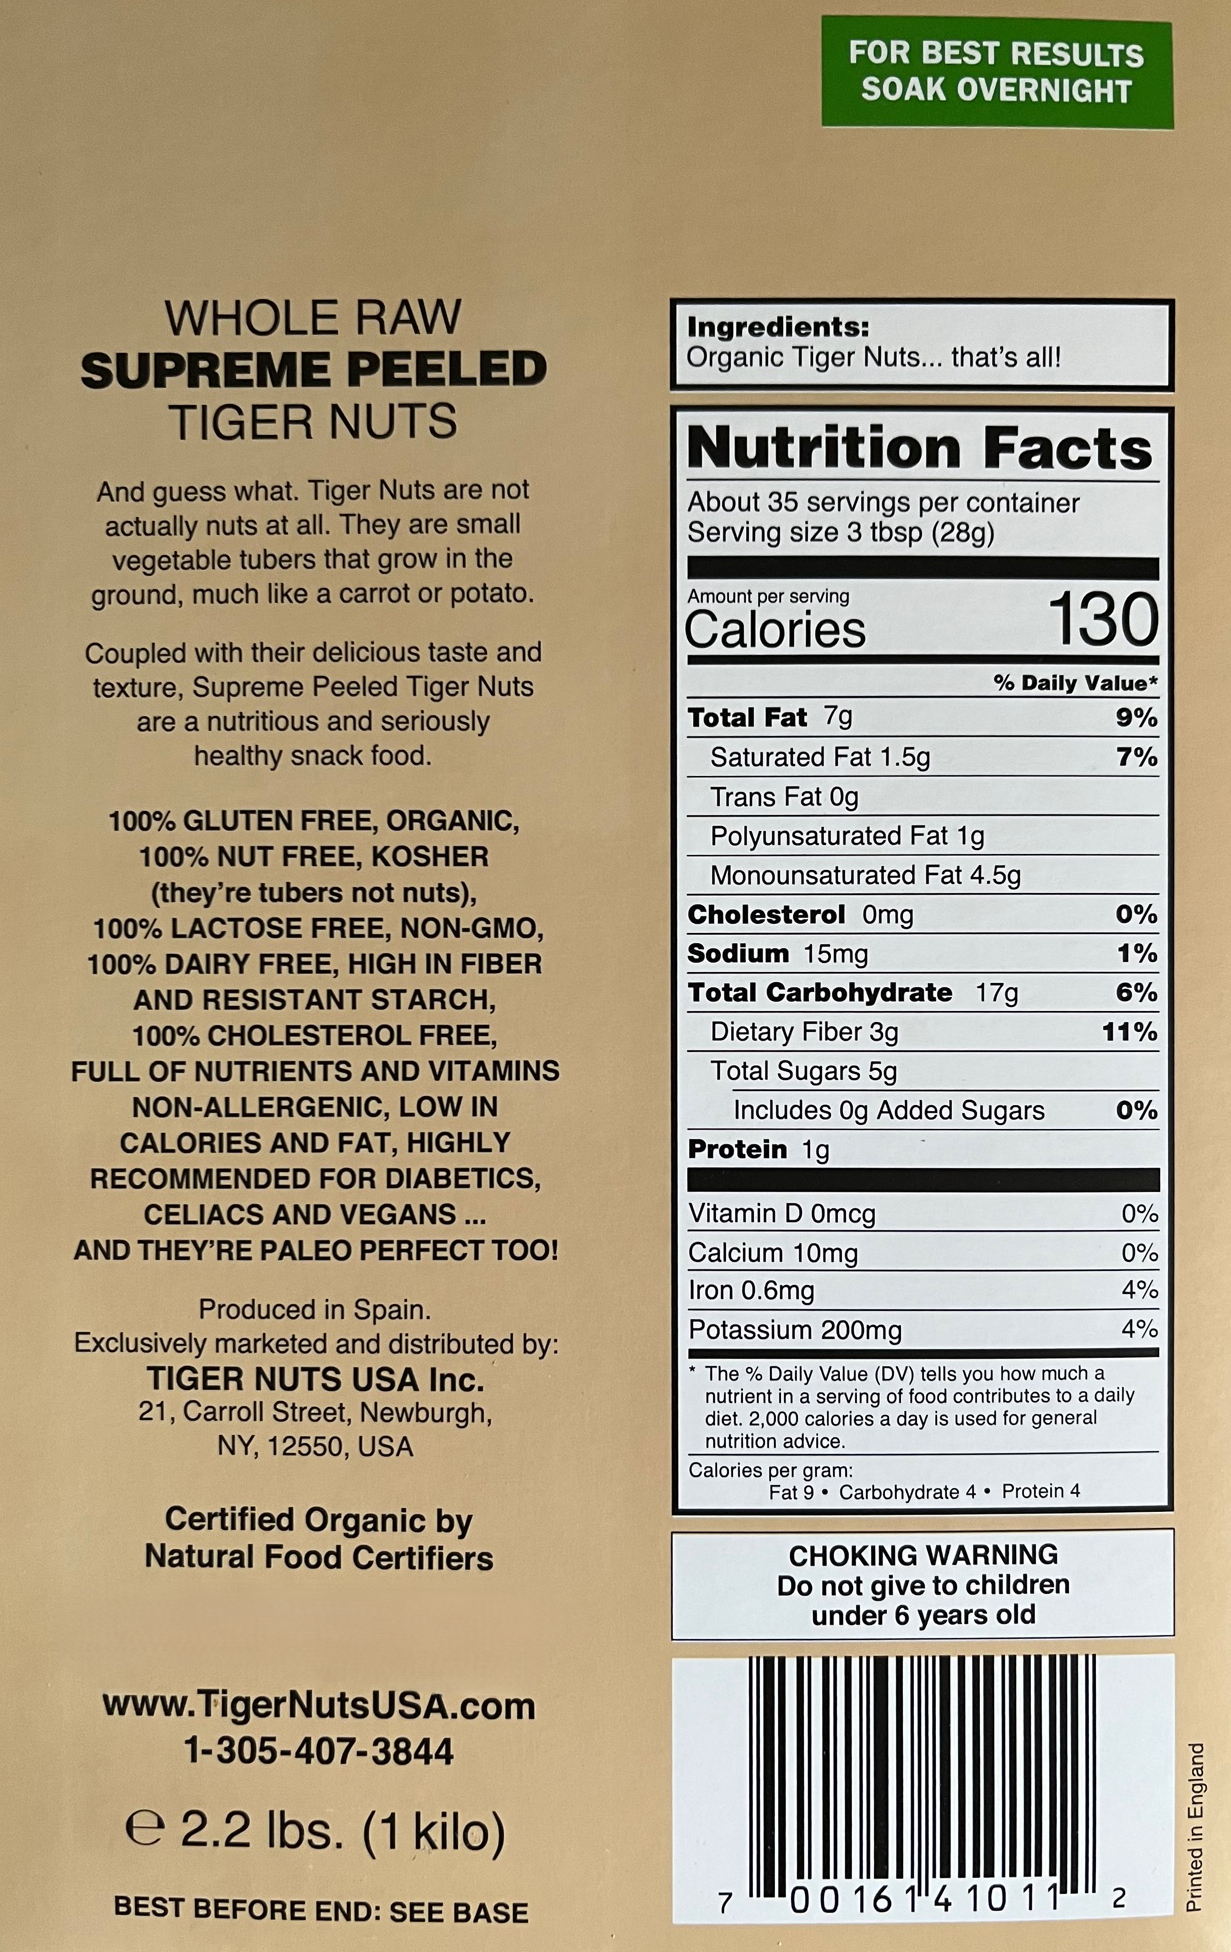 Supreme Peeled Tiger Nuts in 1 Kilo box (2.2 lbs.)